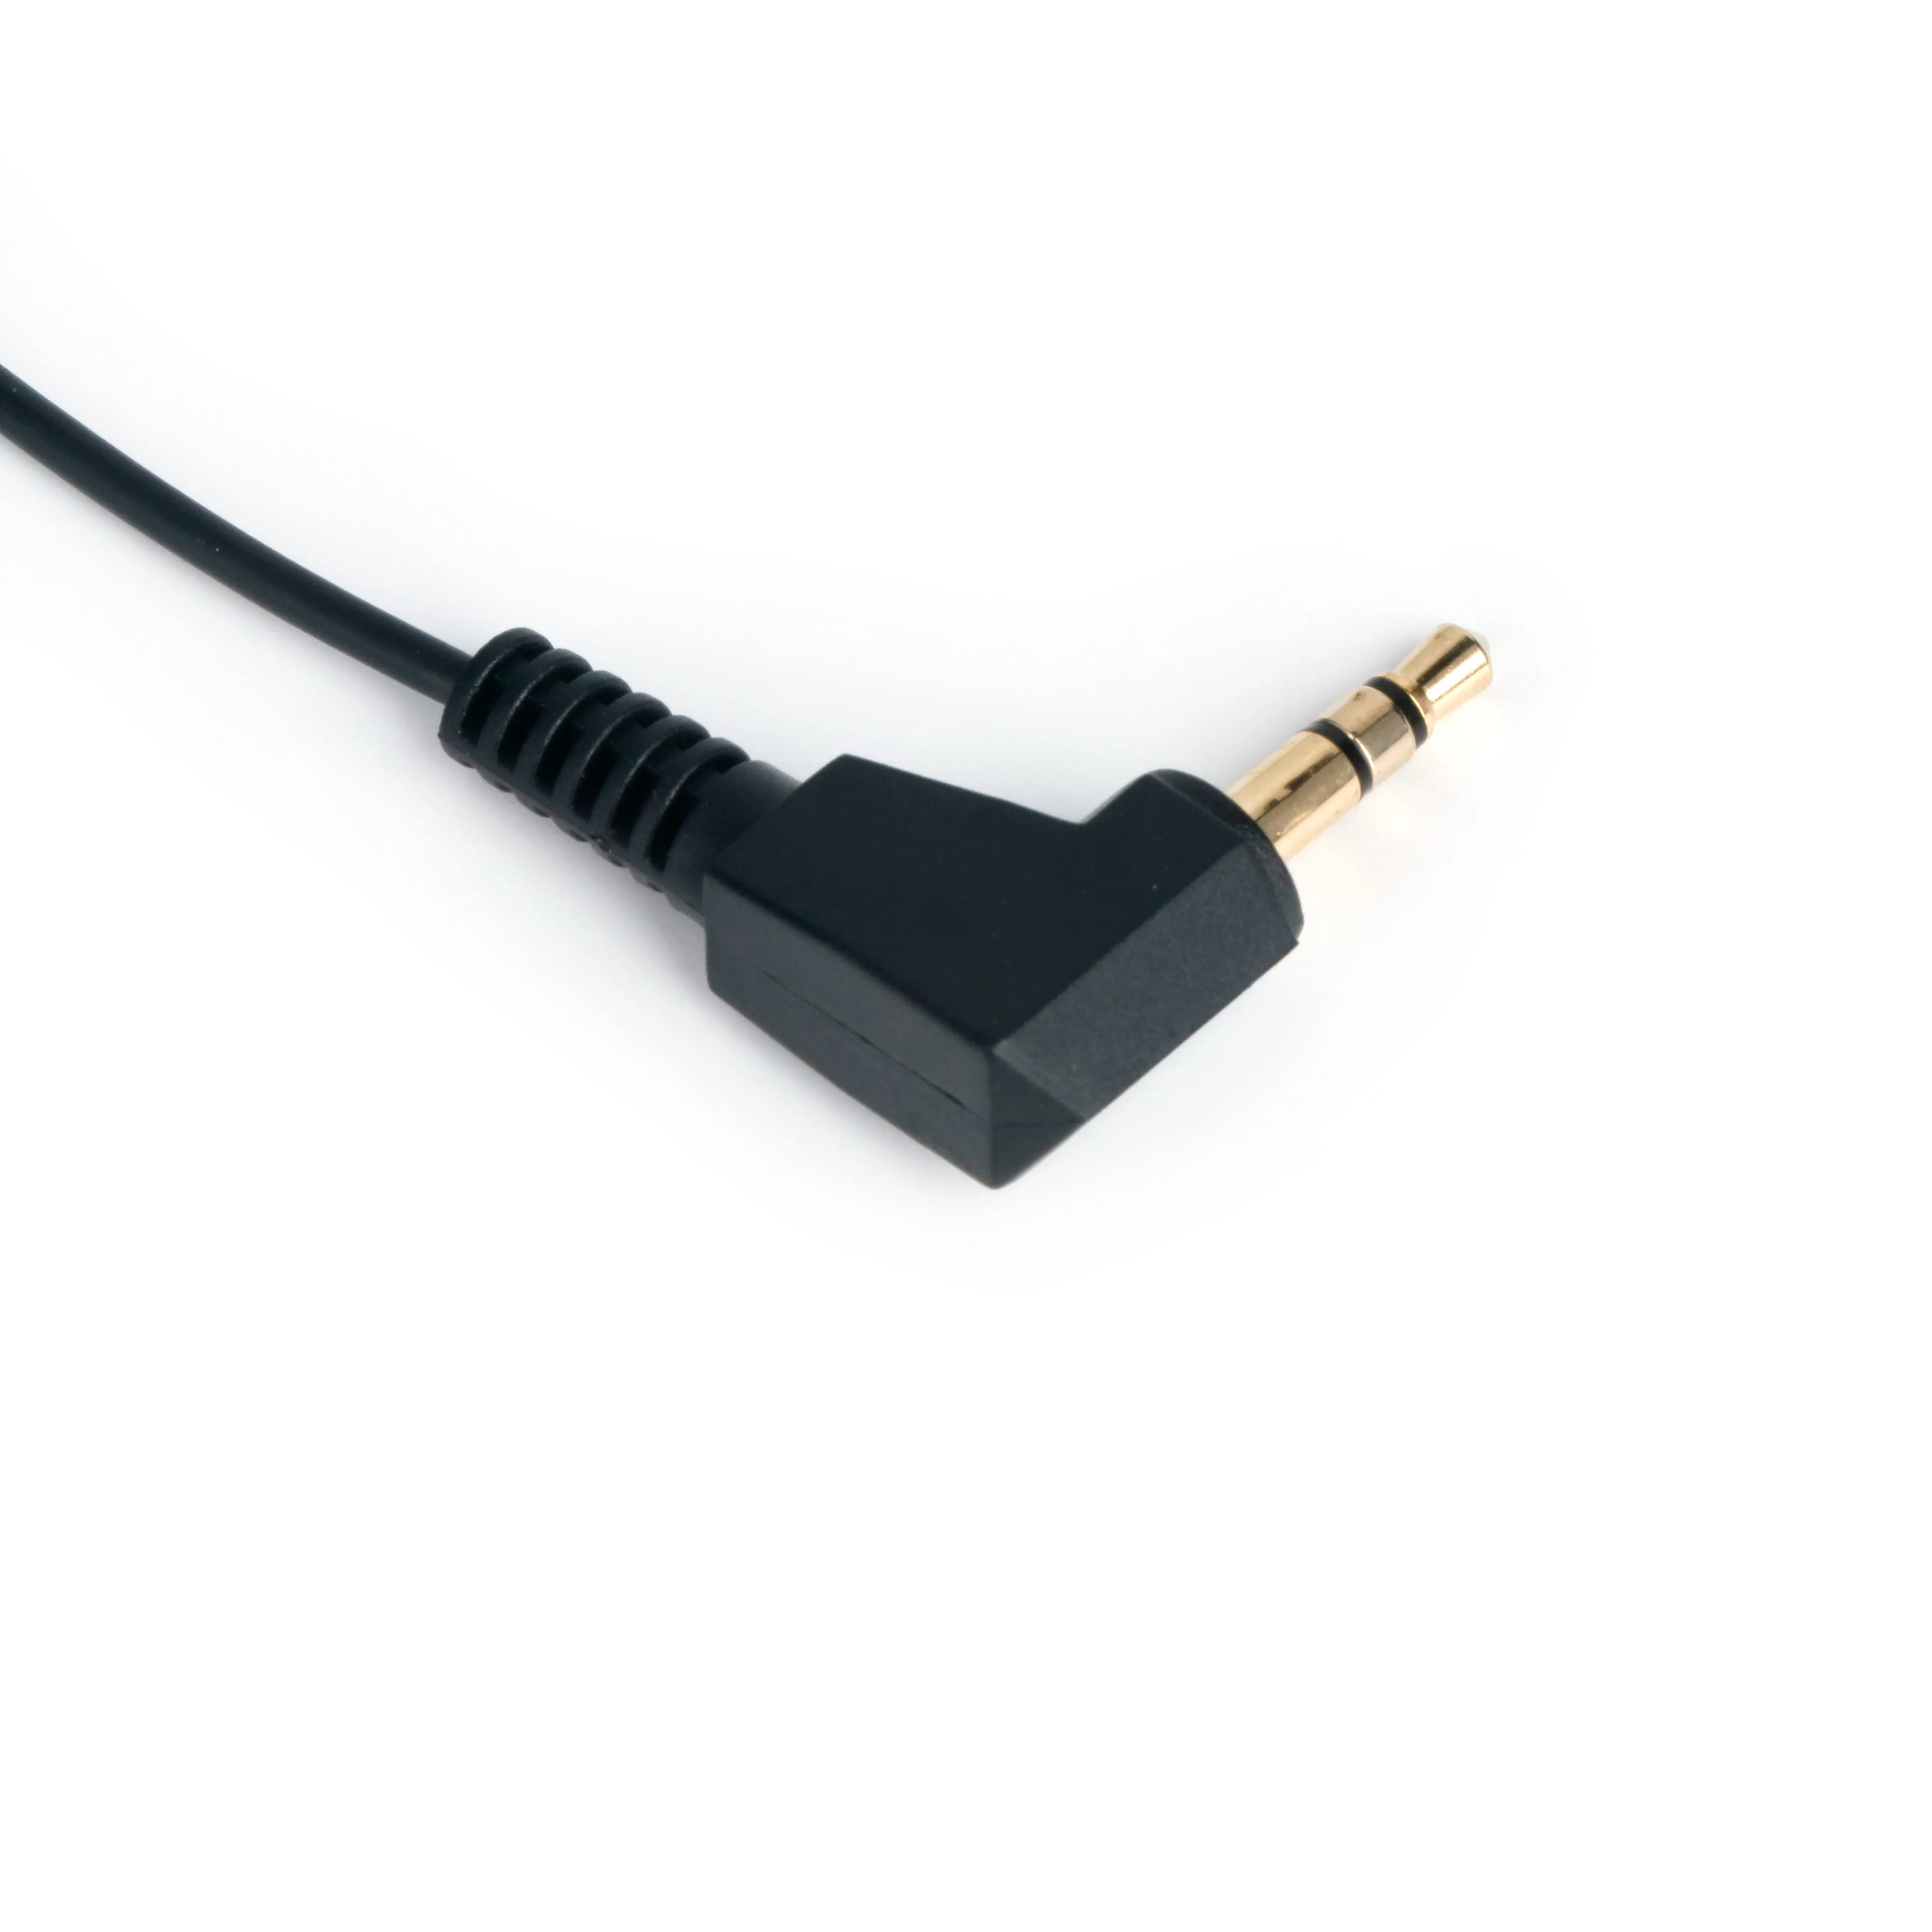 Pro personalizado macho para macho 3,5mm banhado a ouro estéreo interface auscultadores áudio cabo